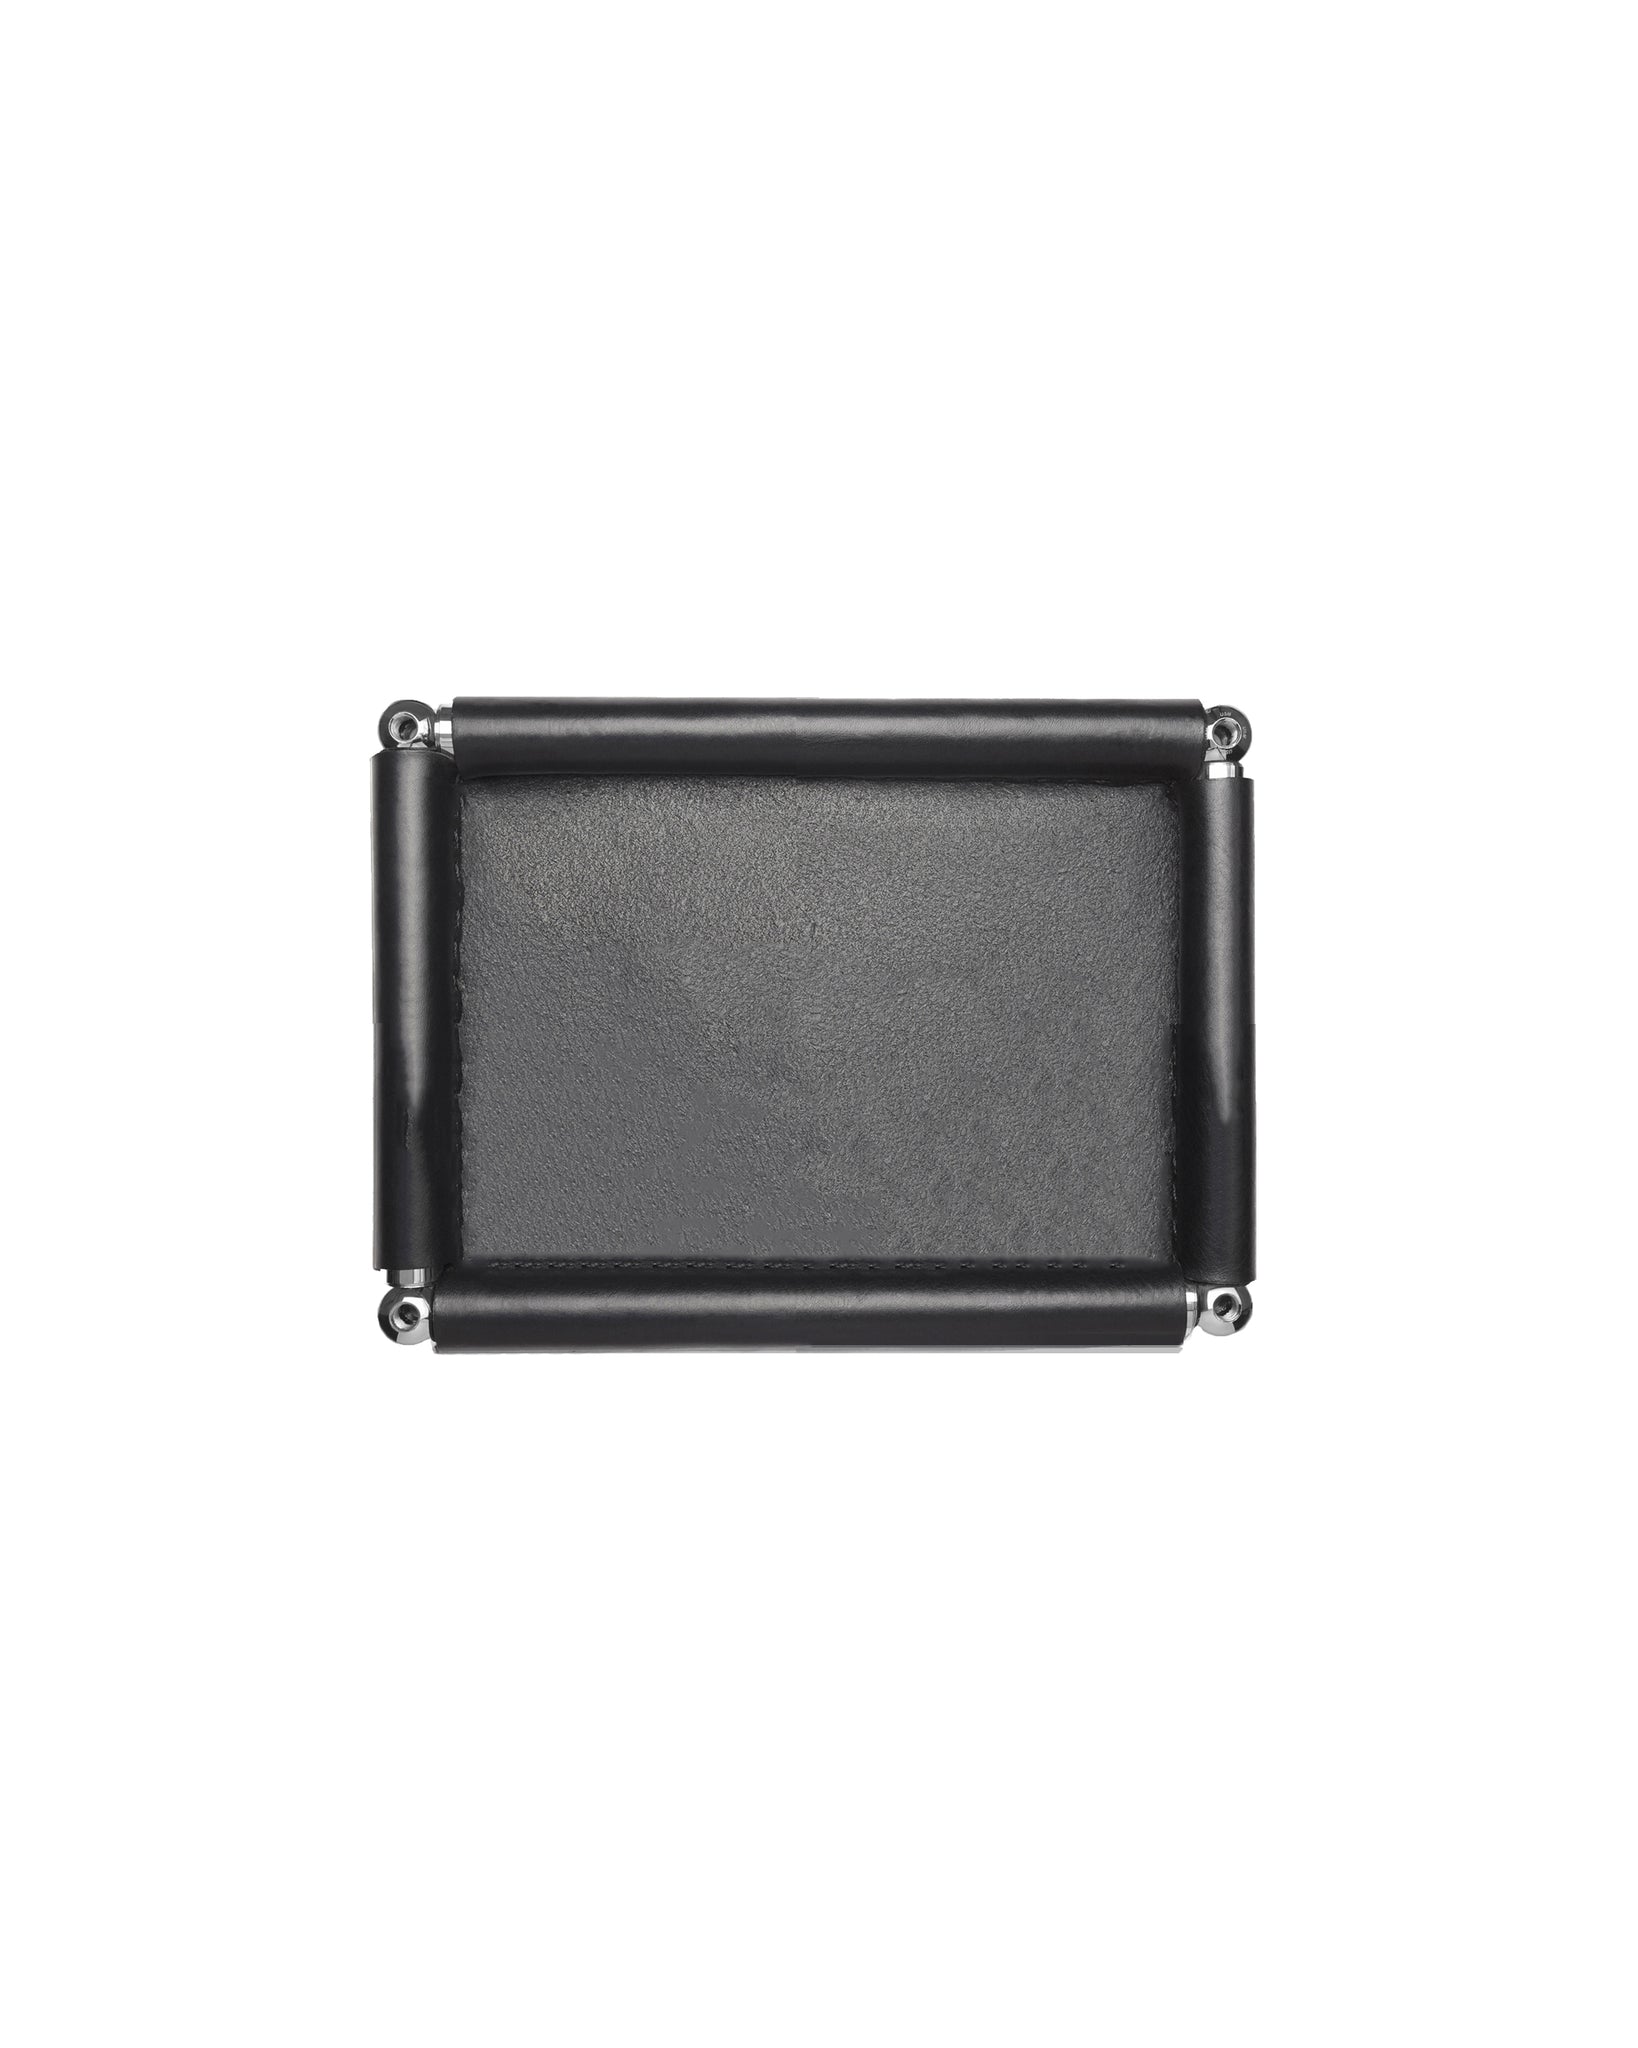 Genuine Black Leather Valet Tray with USM Modular Furniture Components - Medium